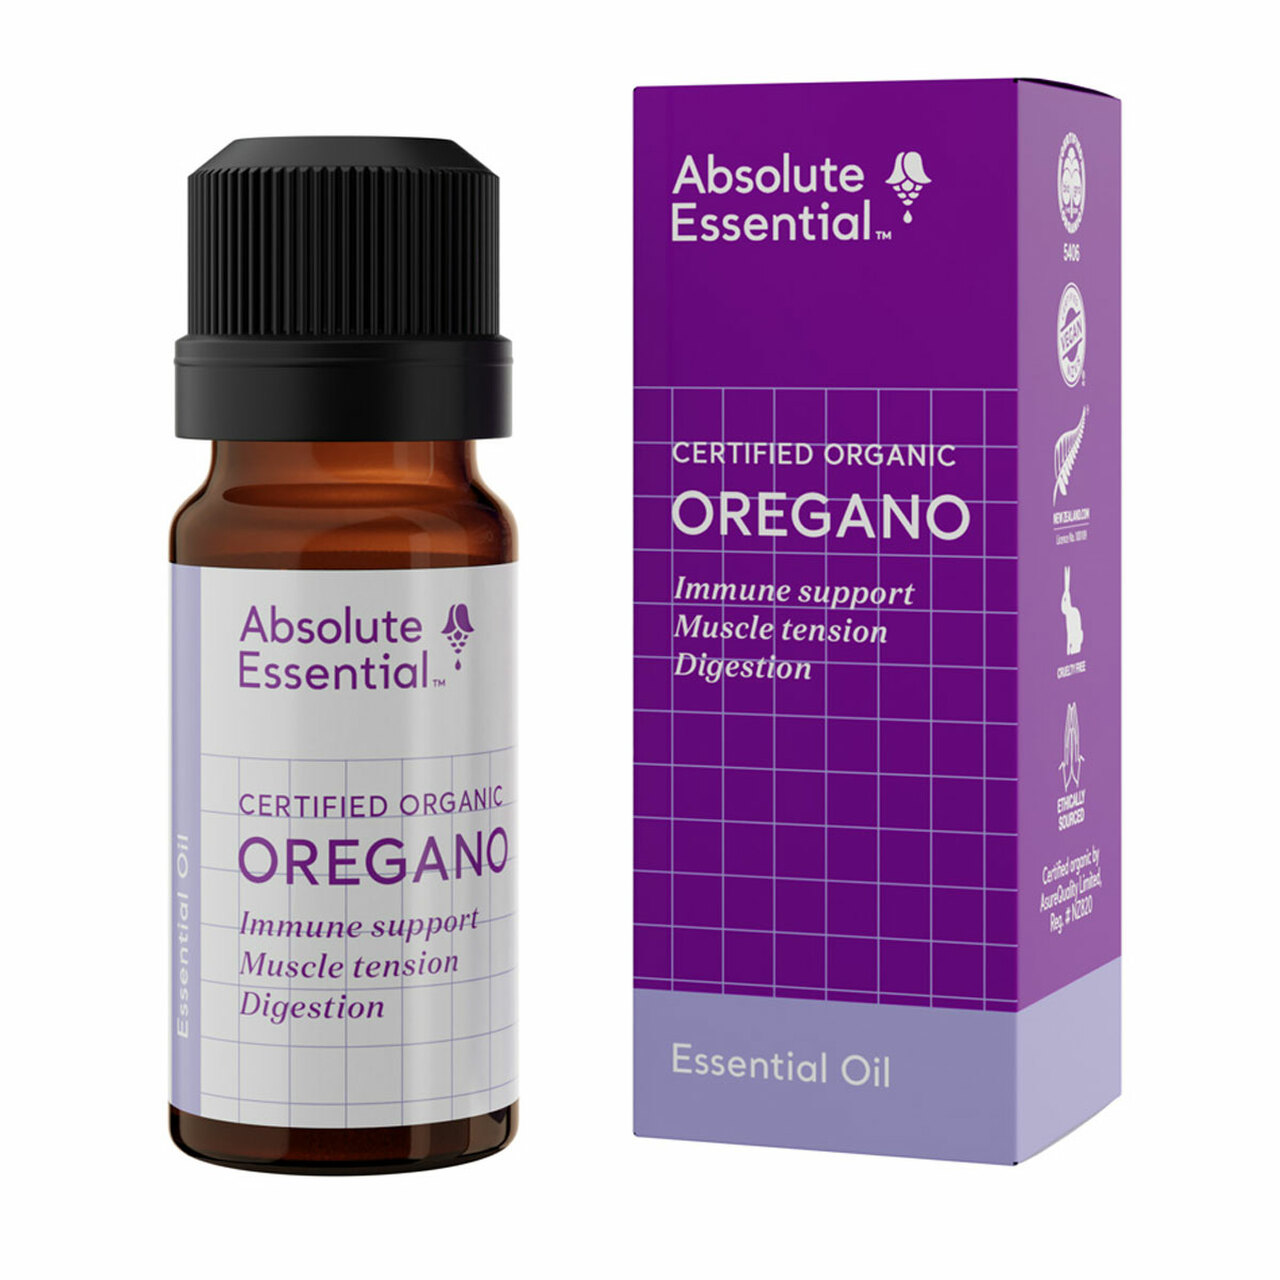 Absolute Essential Oregano Certified Organic  10ml